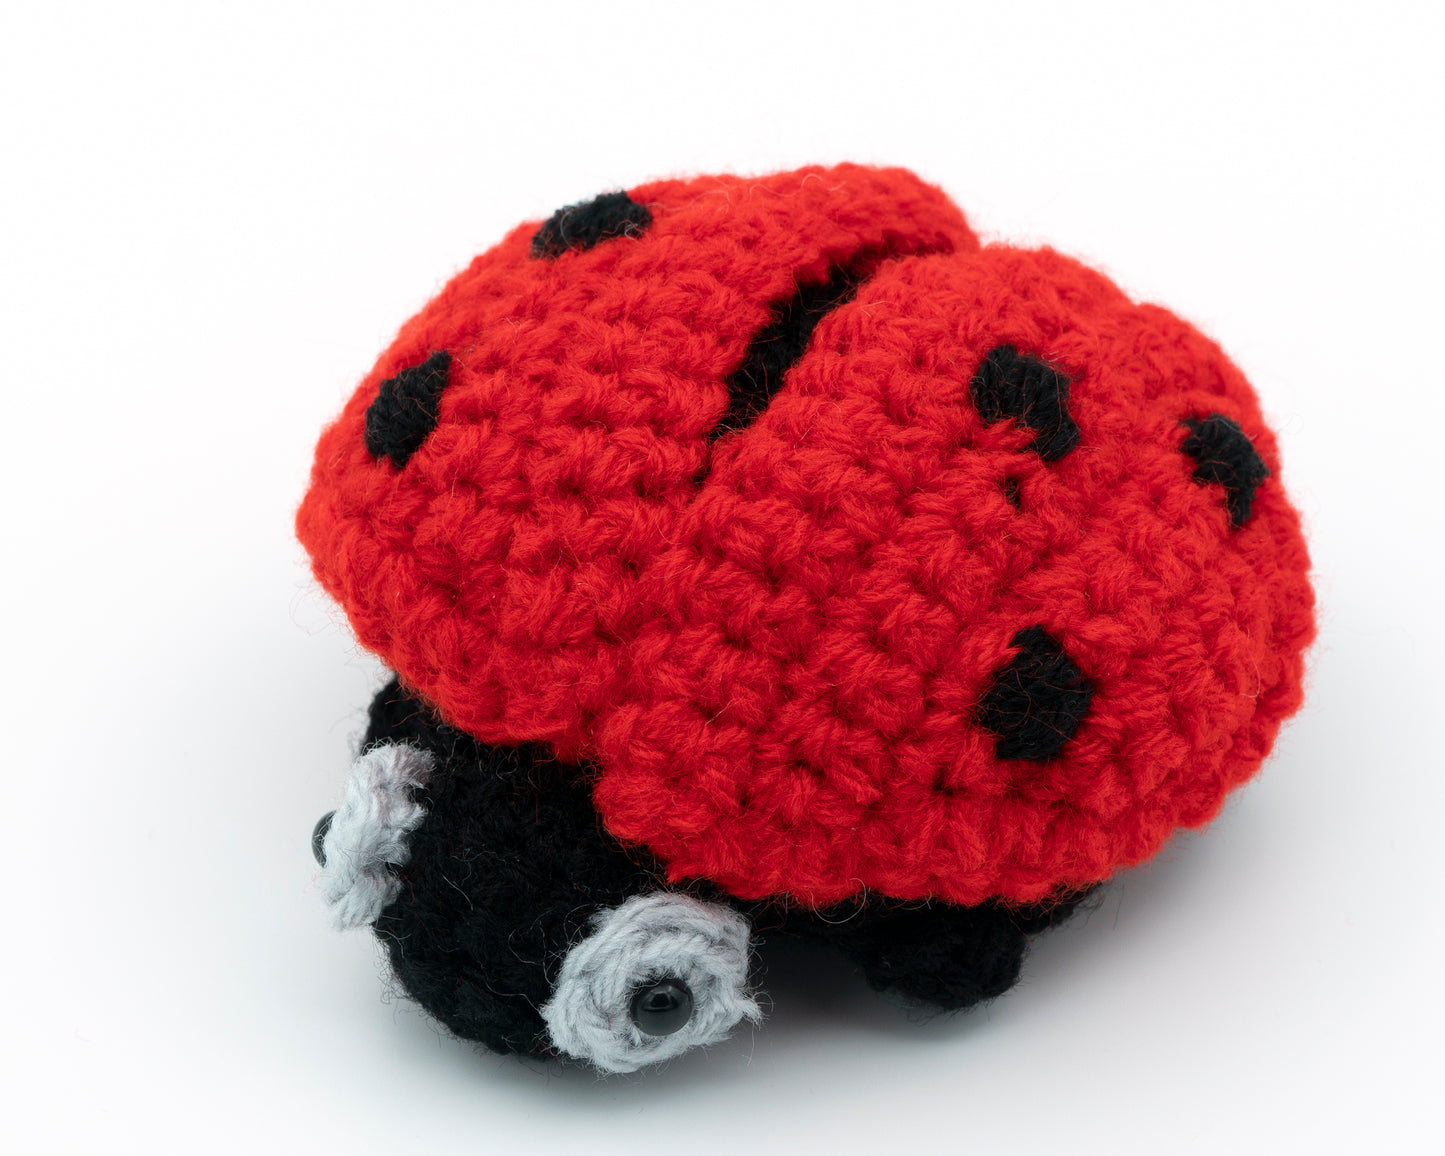 amigurumi crochet ladybug pattern close up of face